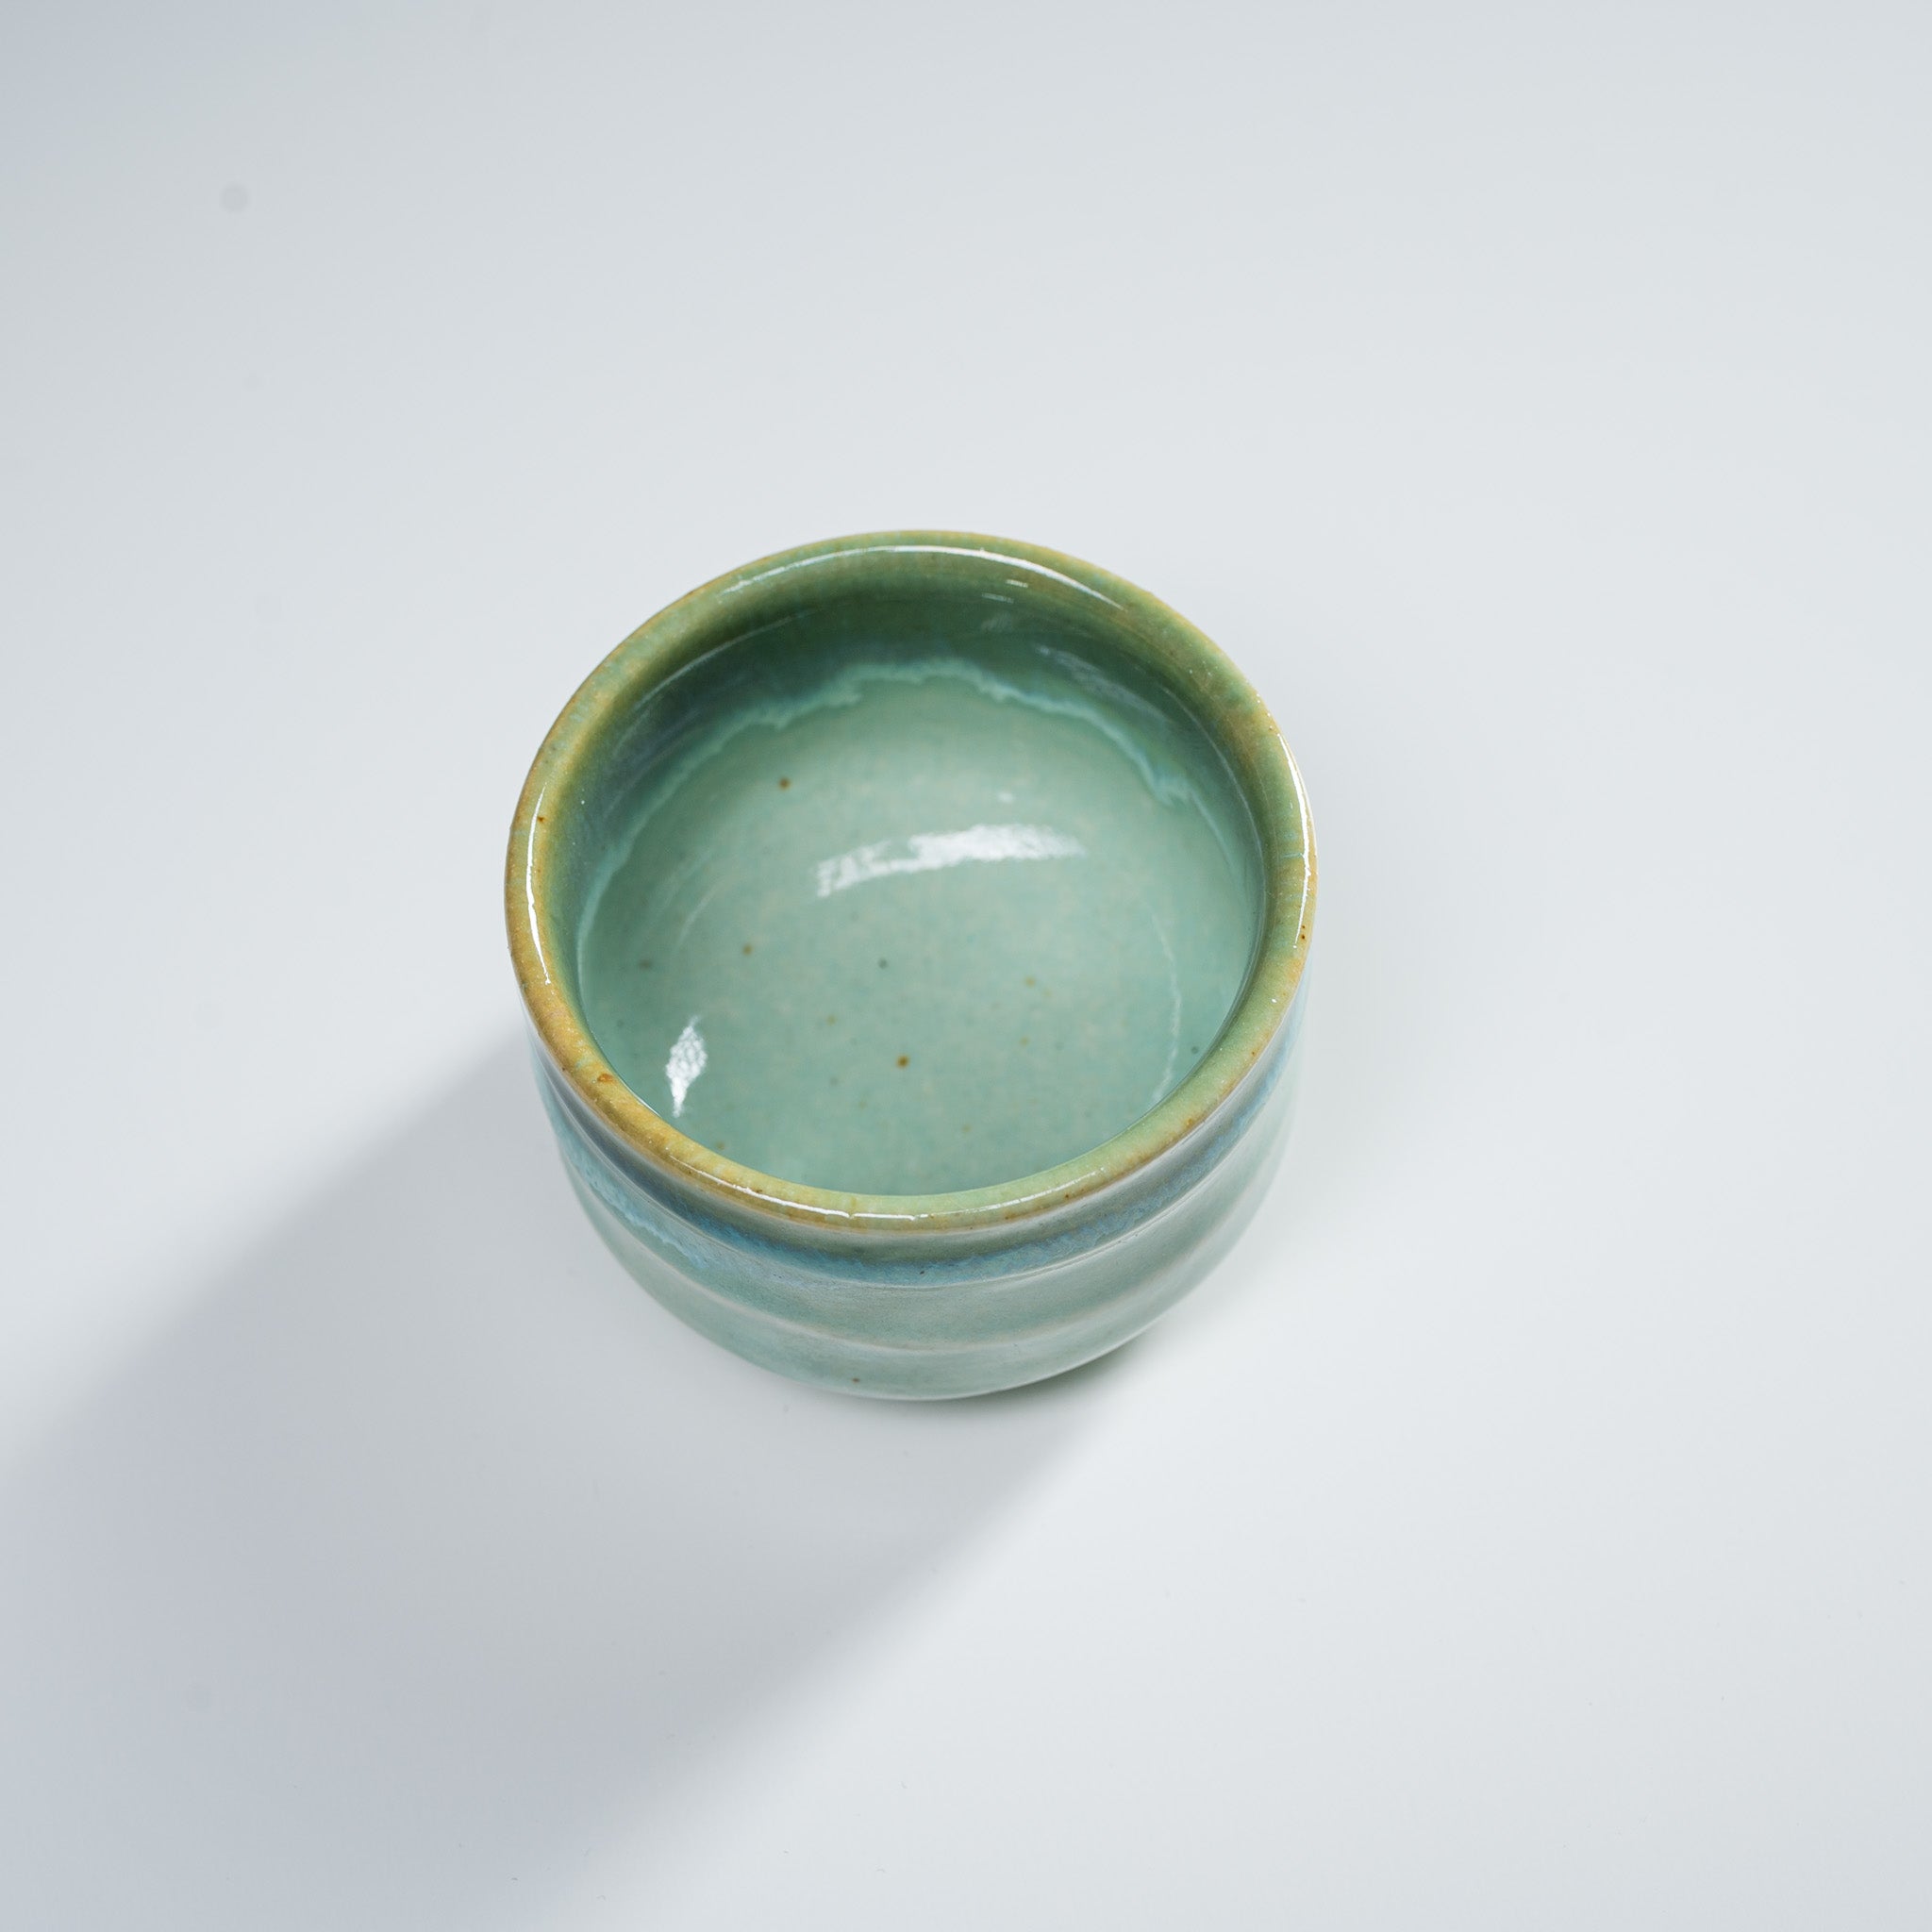 Mino ware Pottery Sake Cup / Teacup - Aquaness / 美濃焼き ぐい呑み